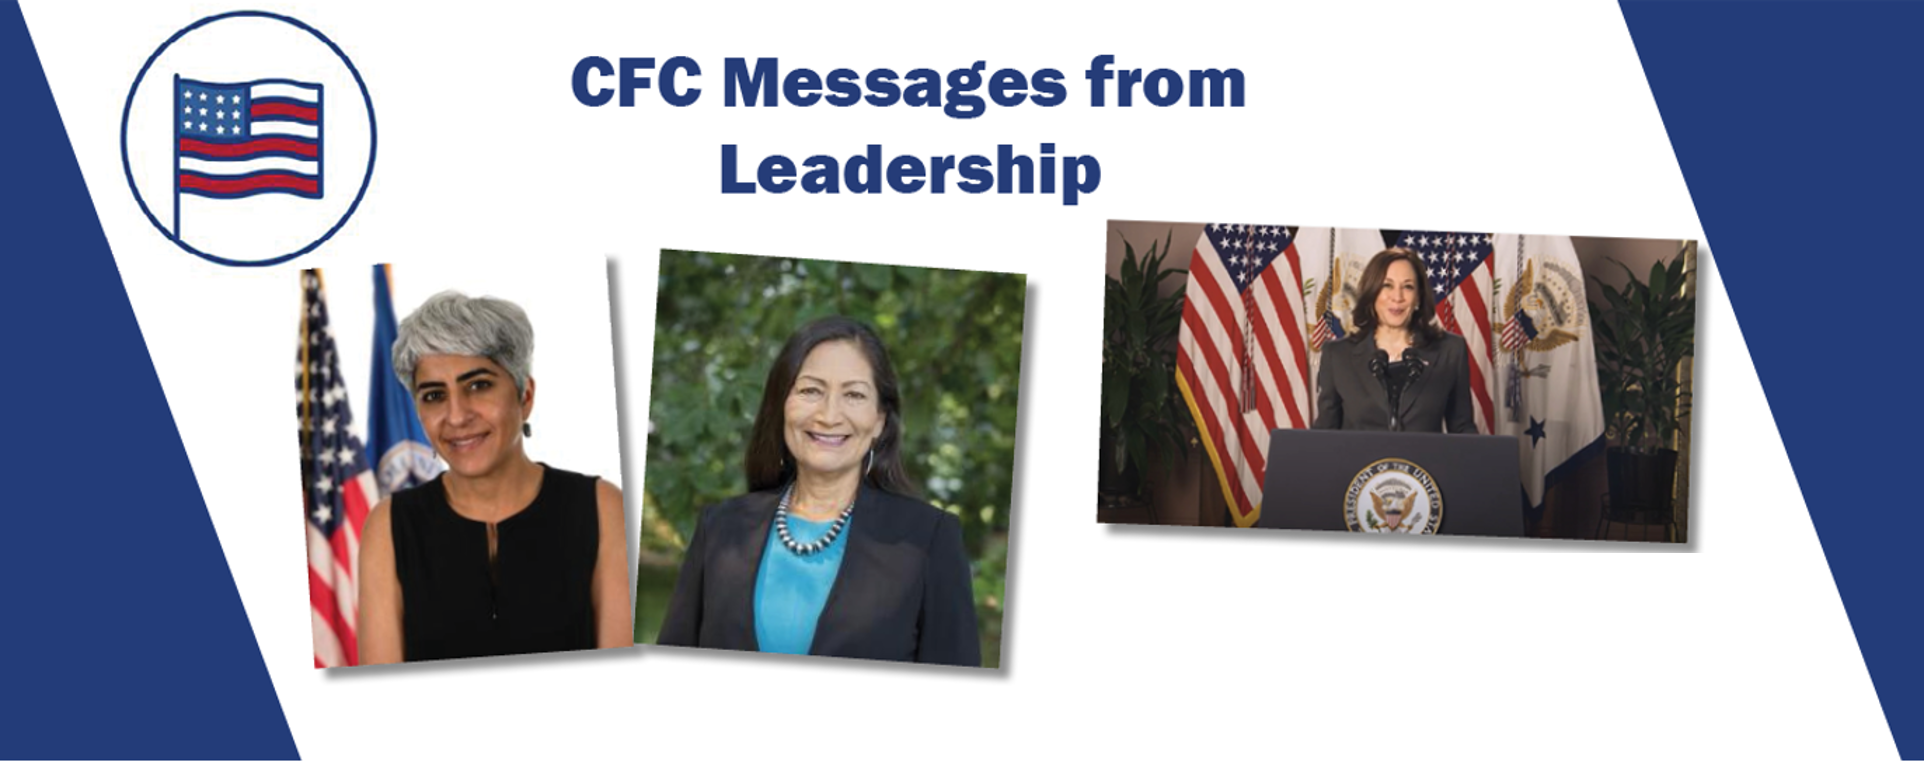 CFC Messages from leadership with photos of Kirin Ahuja, OPM Director, Deb Haaland, Secretary of the Interior, and VP Kamala Harris